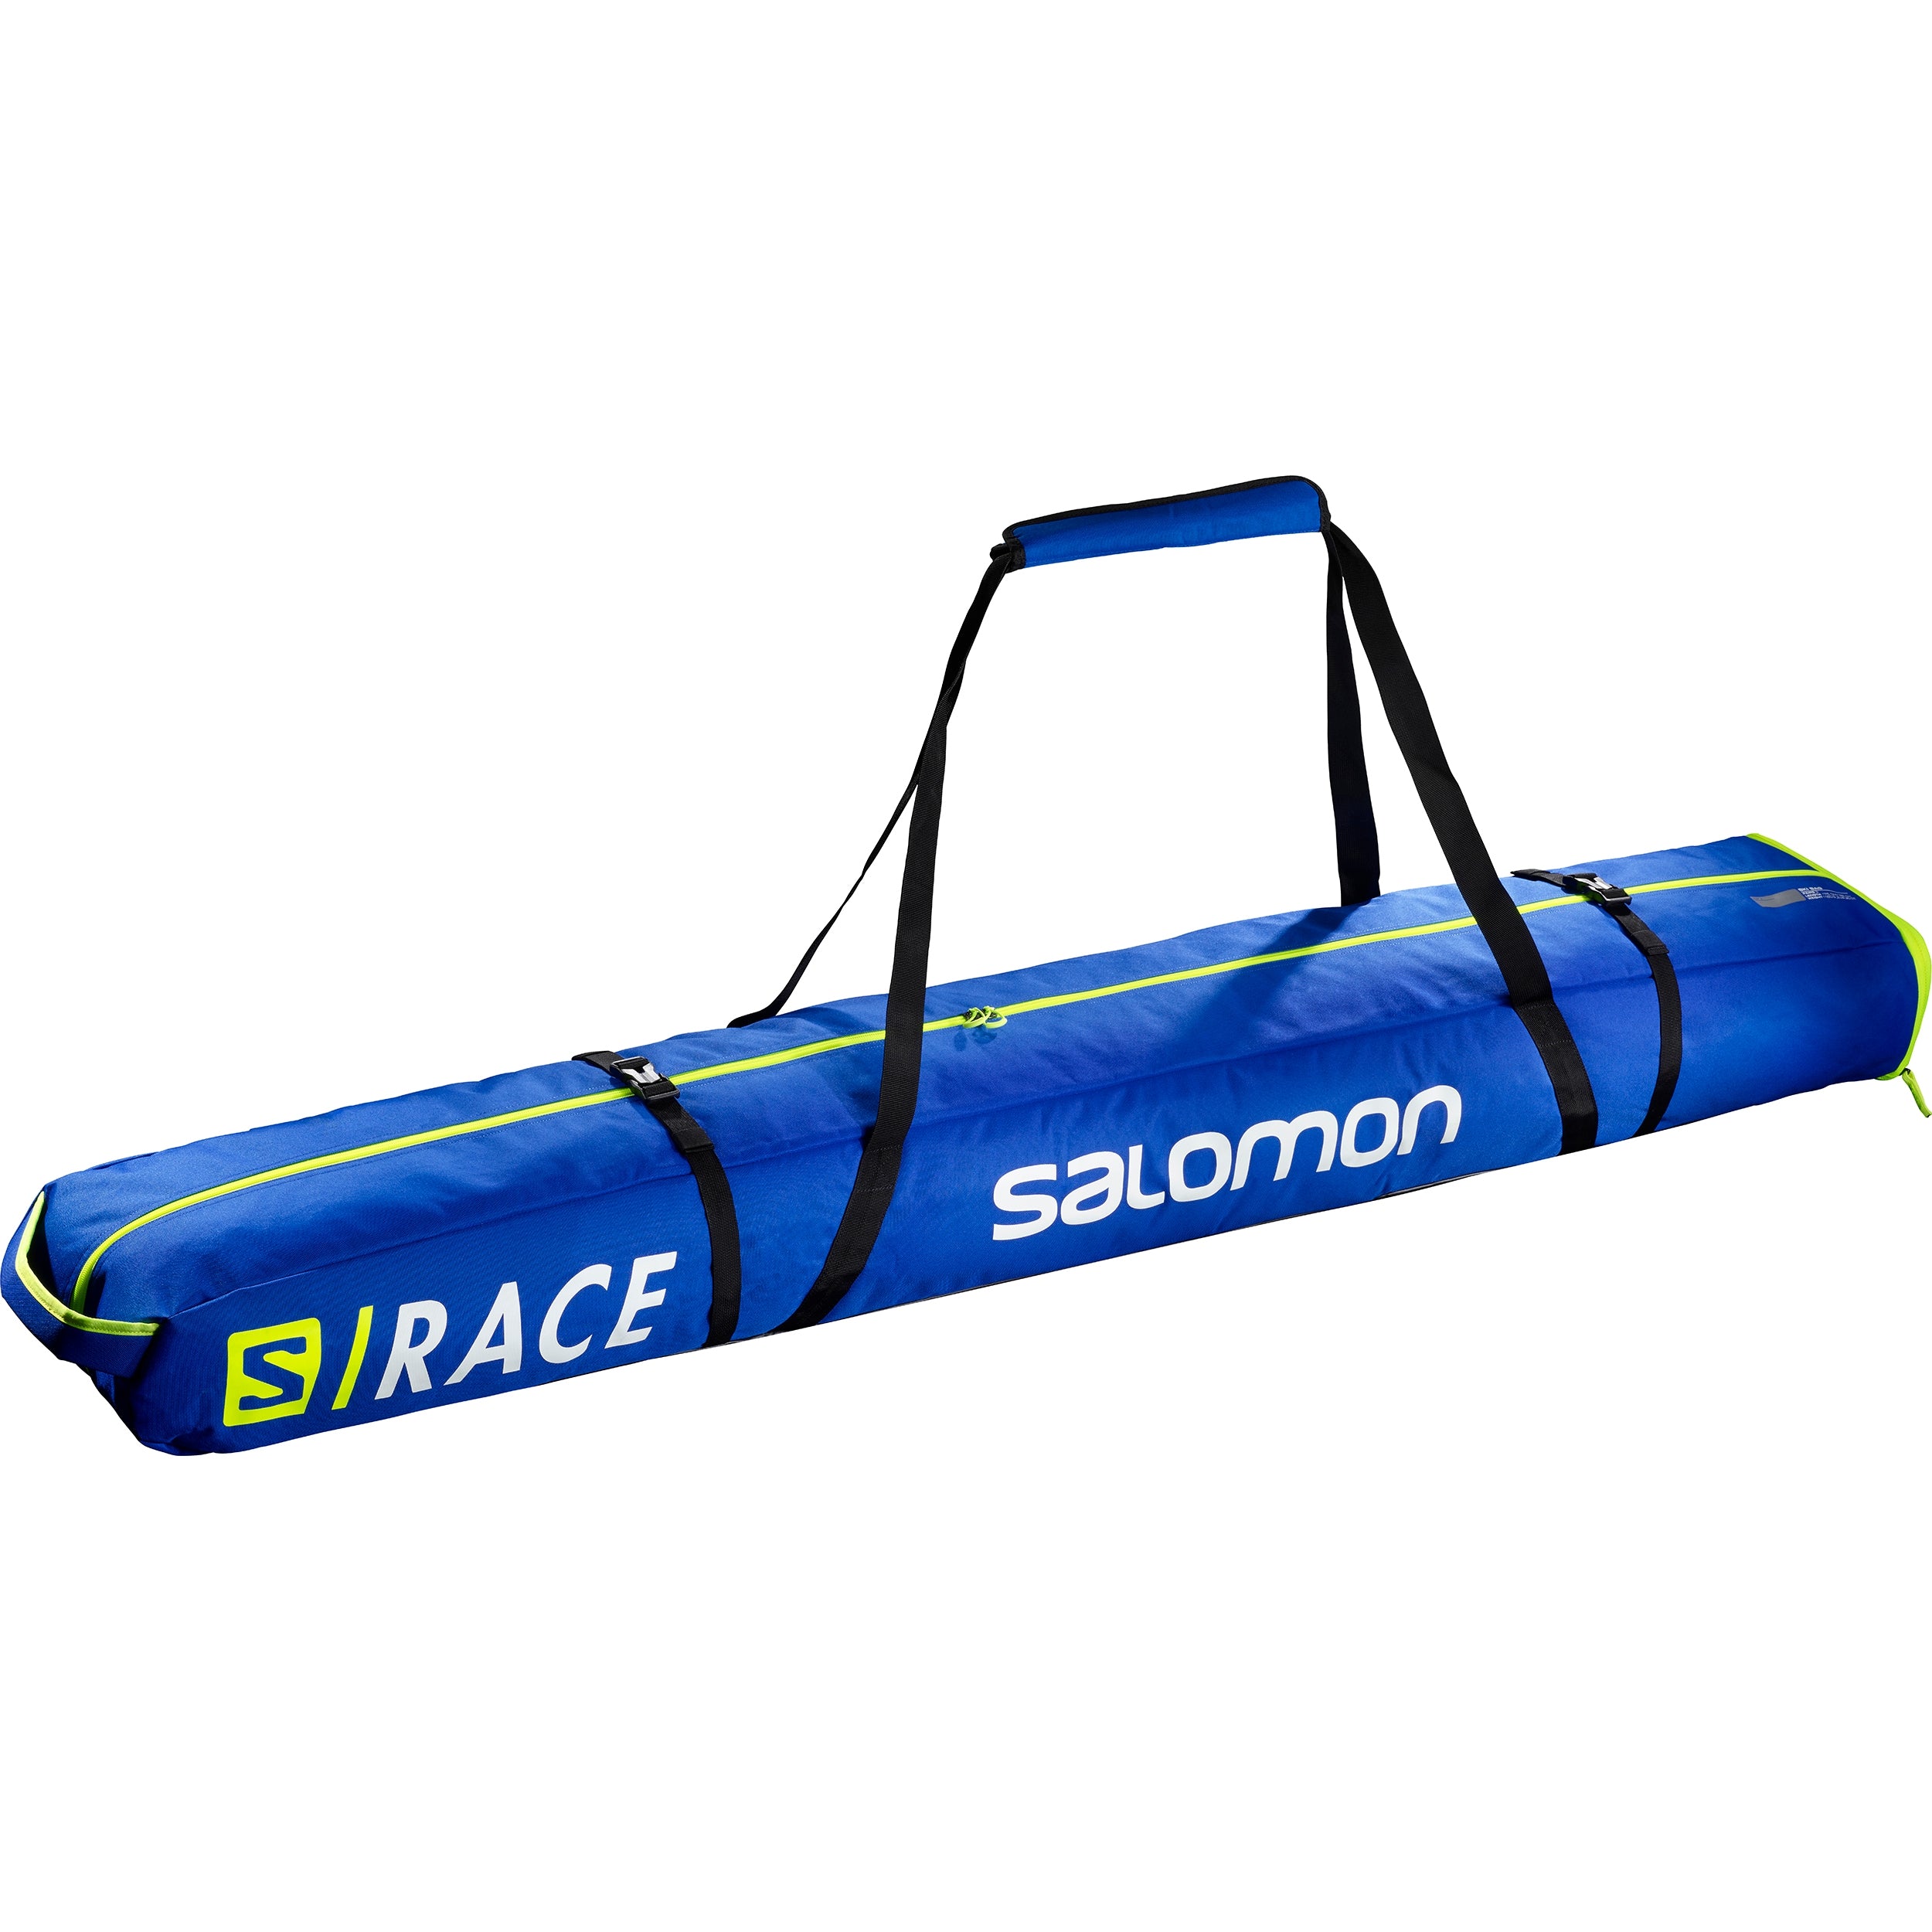 Salomon Extend 2 Pair Ski 175cm in Race Blue – Coyoti.com